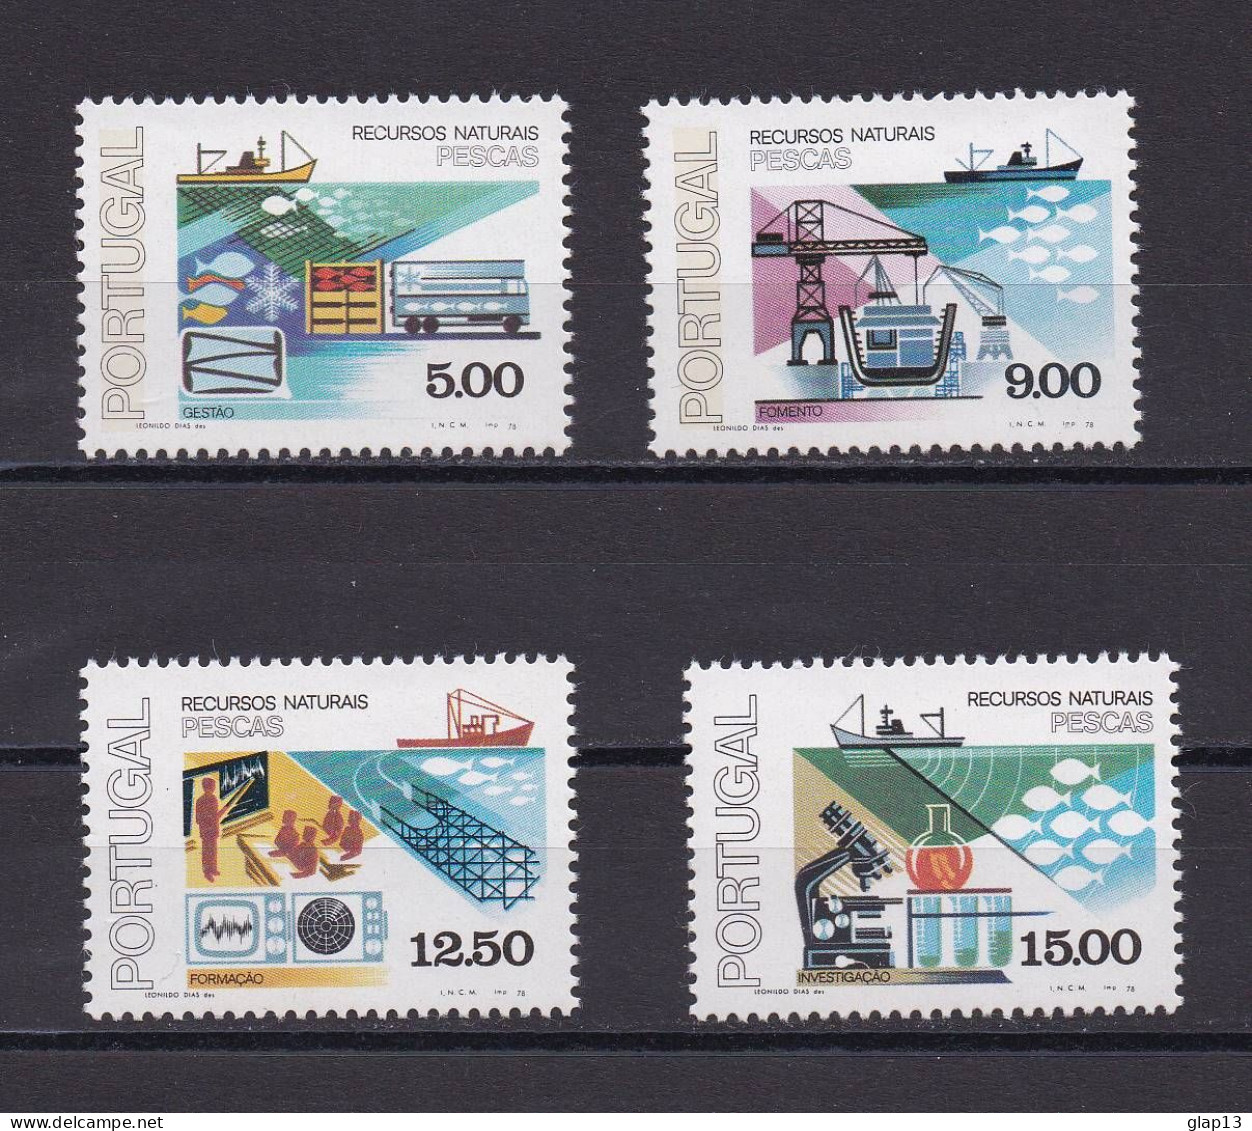 PORTUGAL 1978 TIMBRE N°1393/96 NEUF** LA PECHE - Unused Stamps